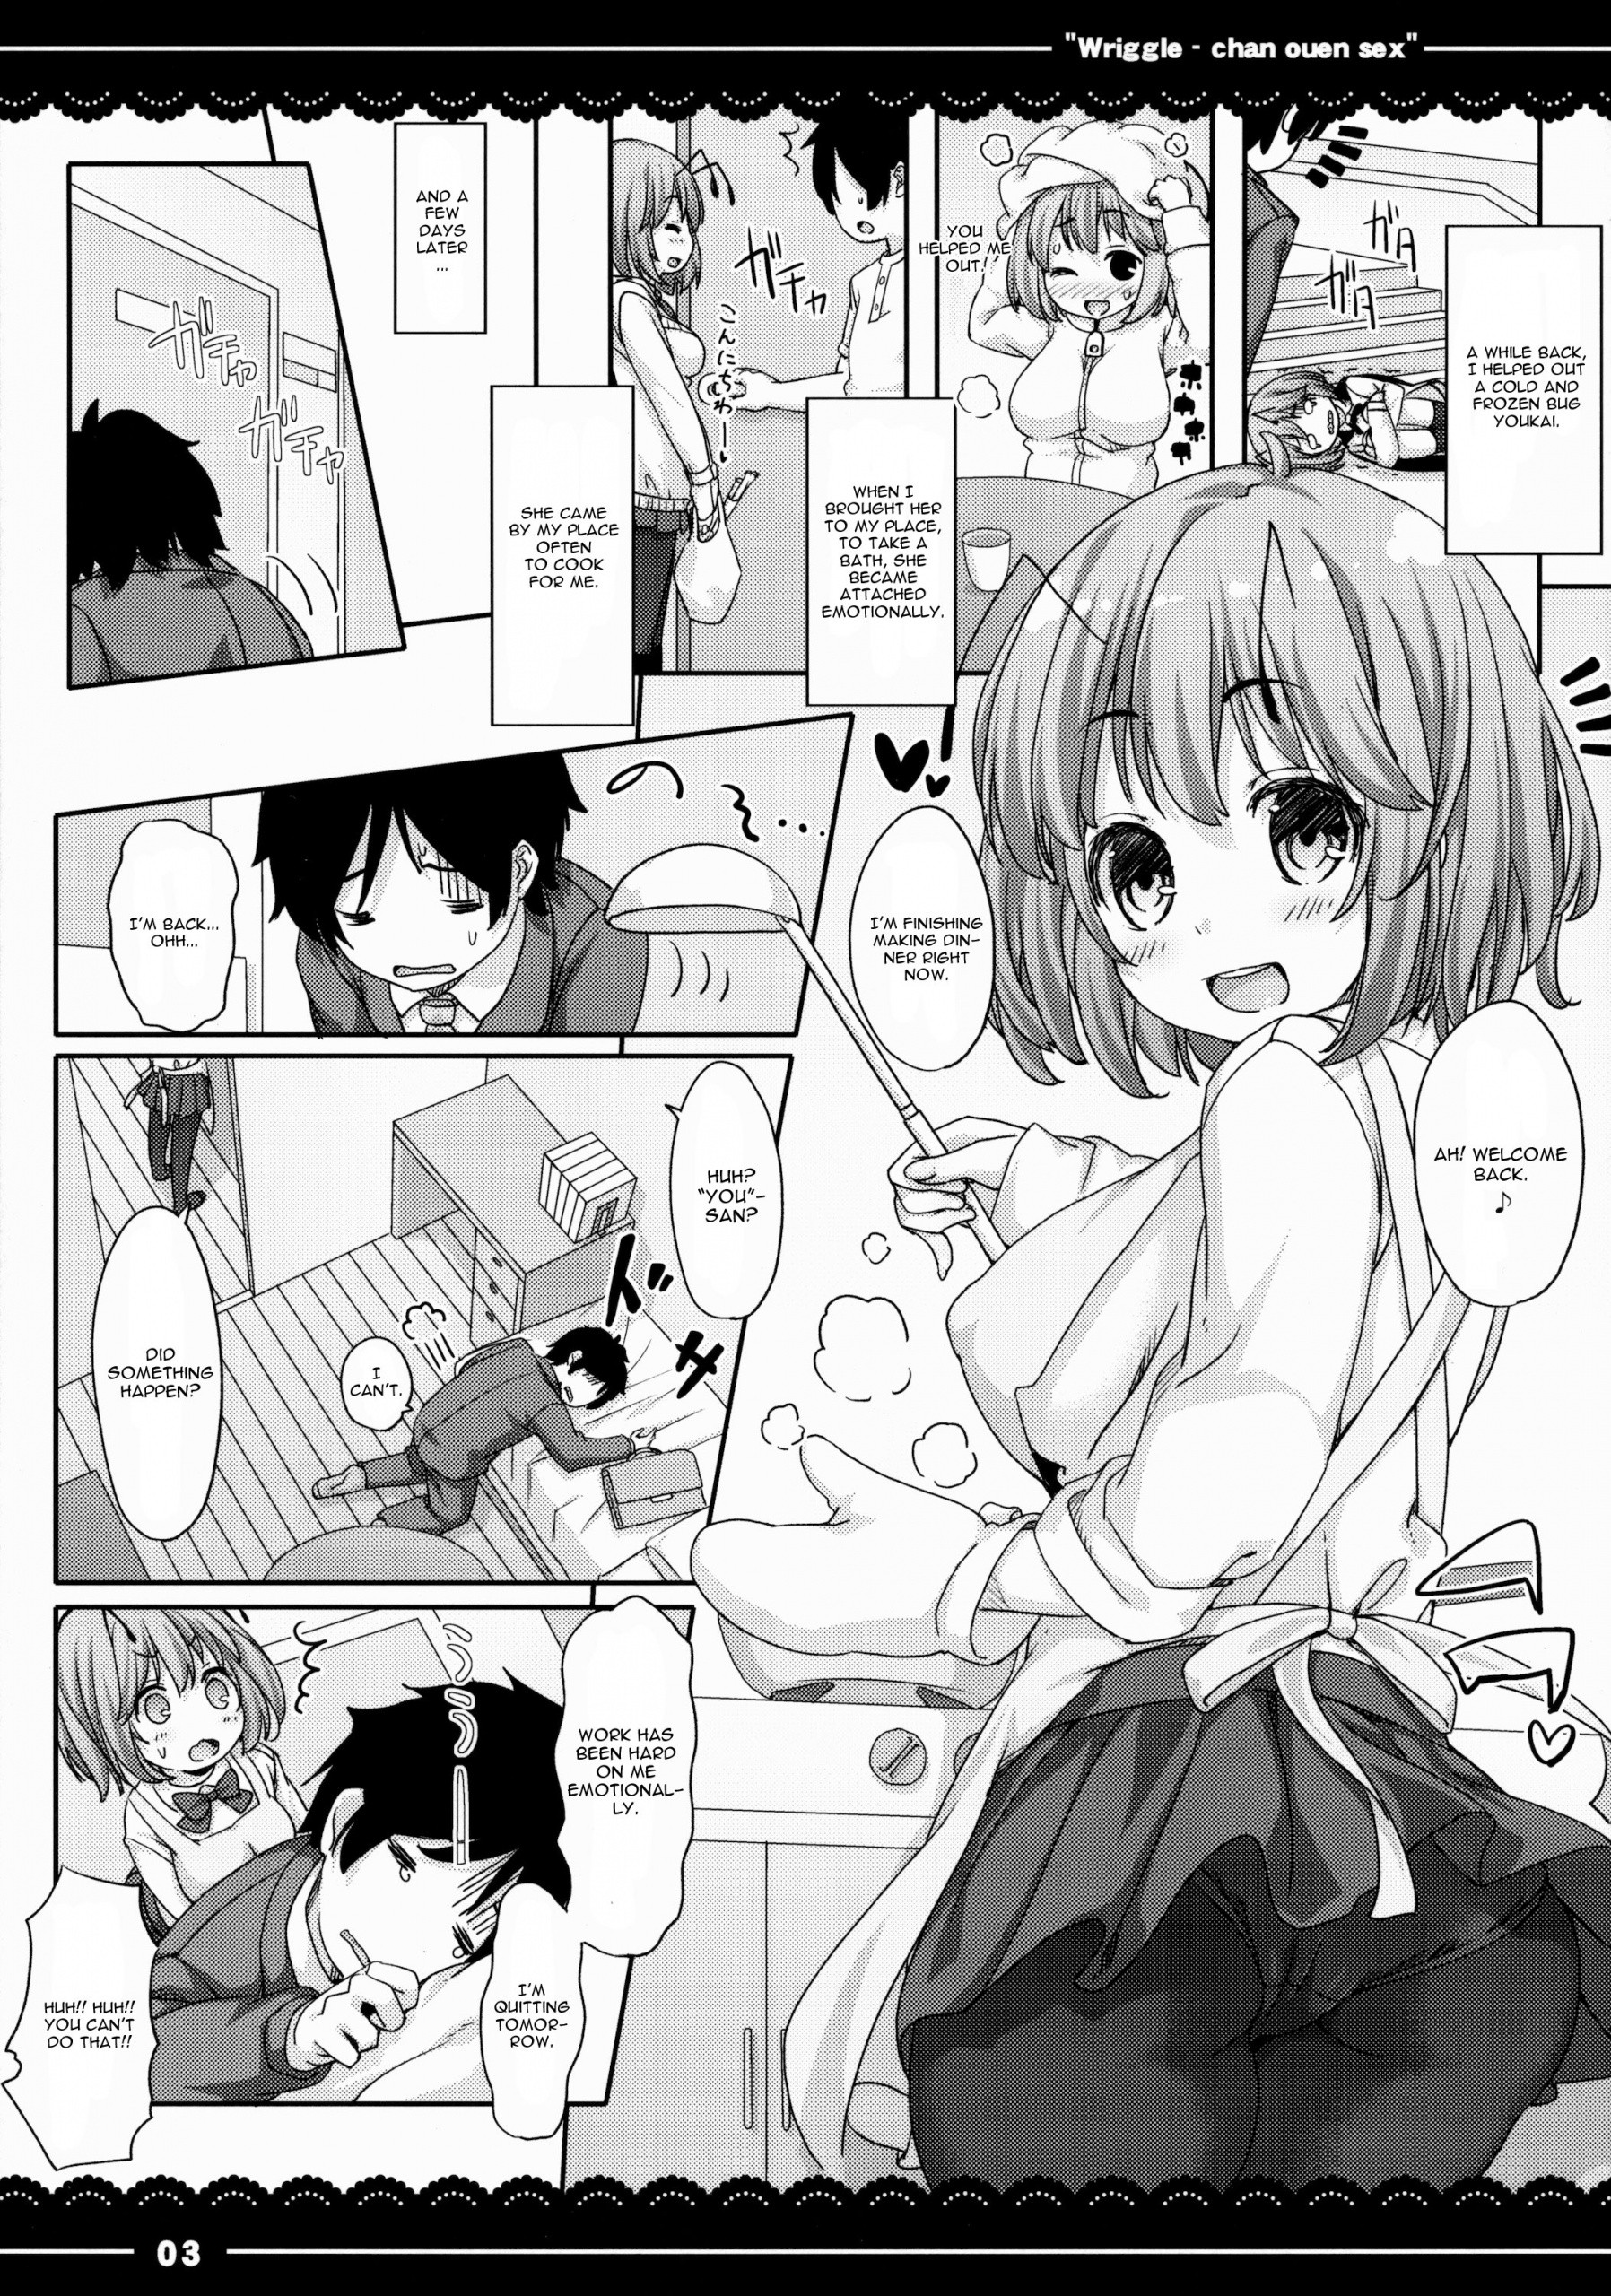 Wriggle-chan Ouen Sex hentai manga picture 2